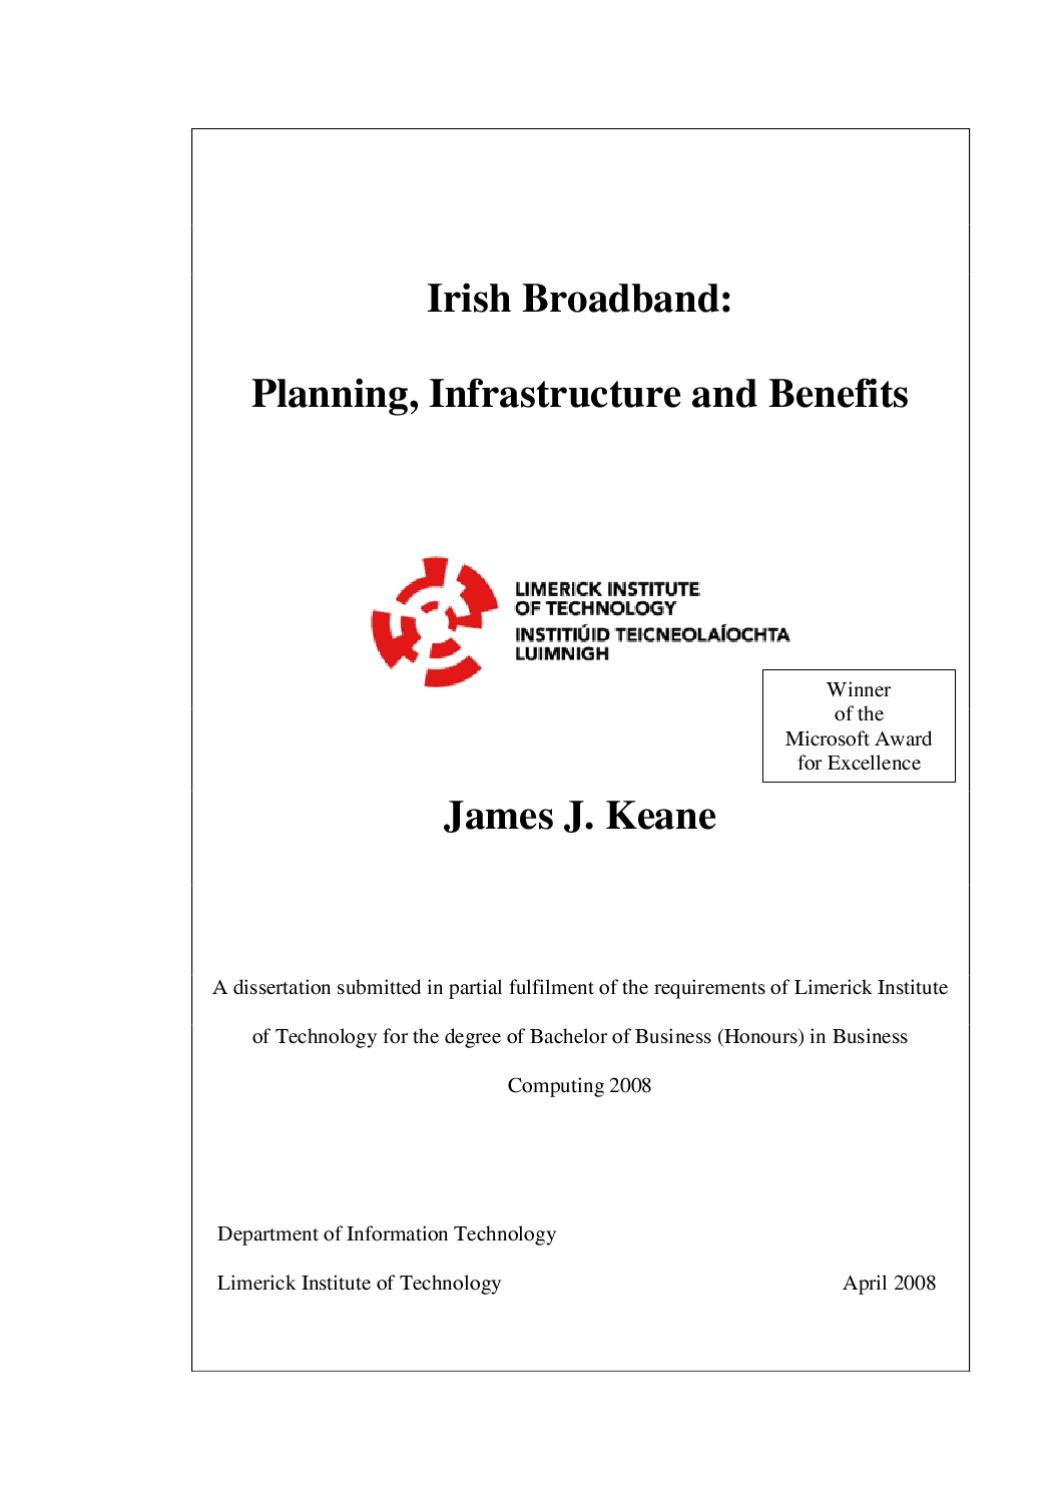 Irish broadband penetration